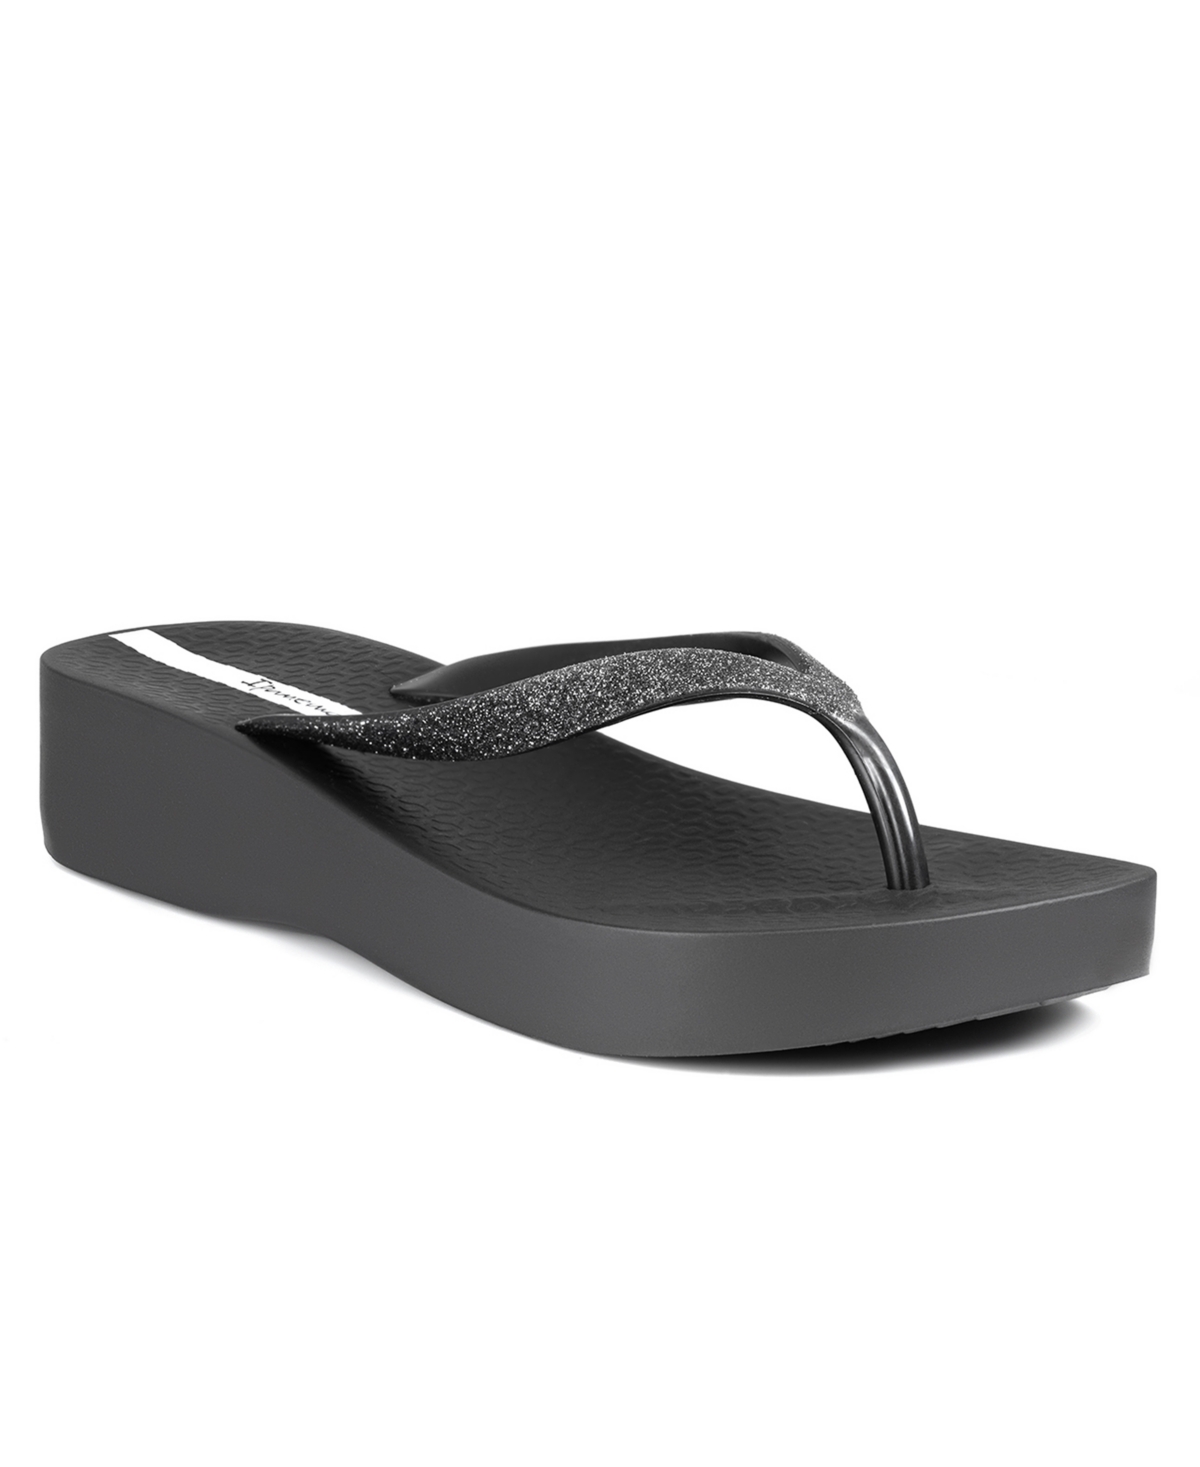 Women's Mesh Chic Comfort Wedge Sandals - Black, Glitter Black